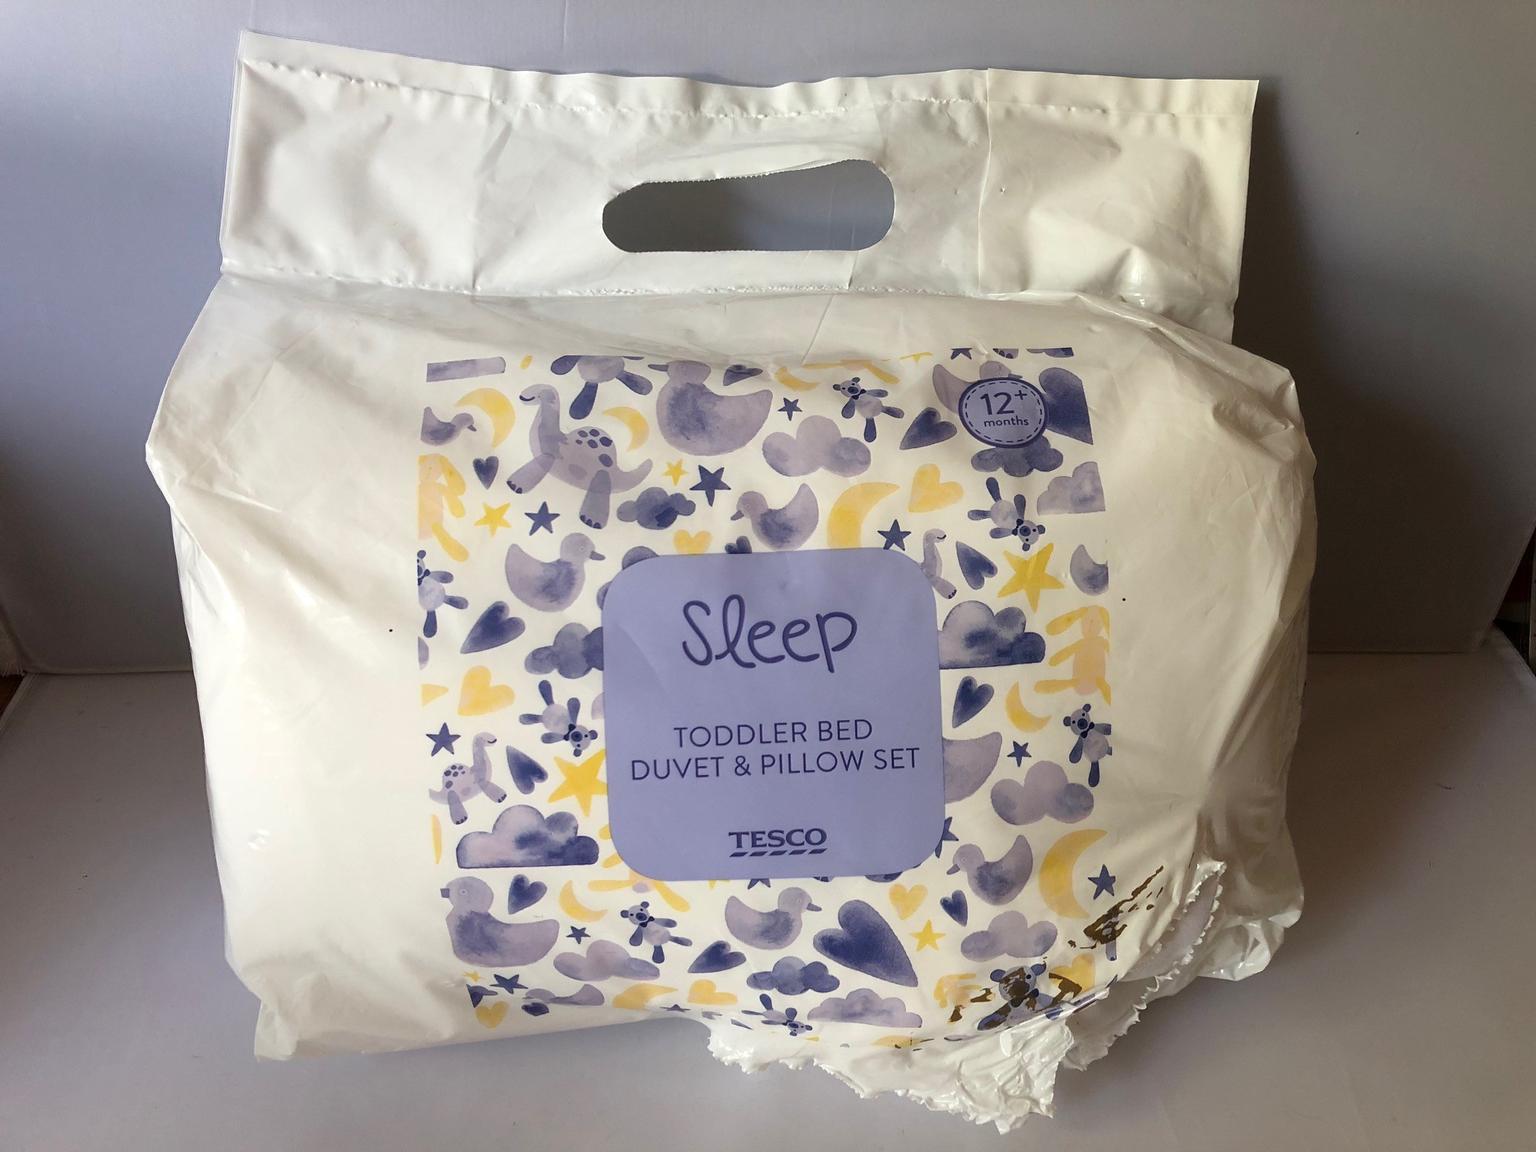 Tesco Toddler Bed Duvet Pillow Set In Epping Forest For 5 00